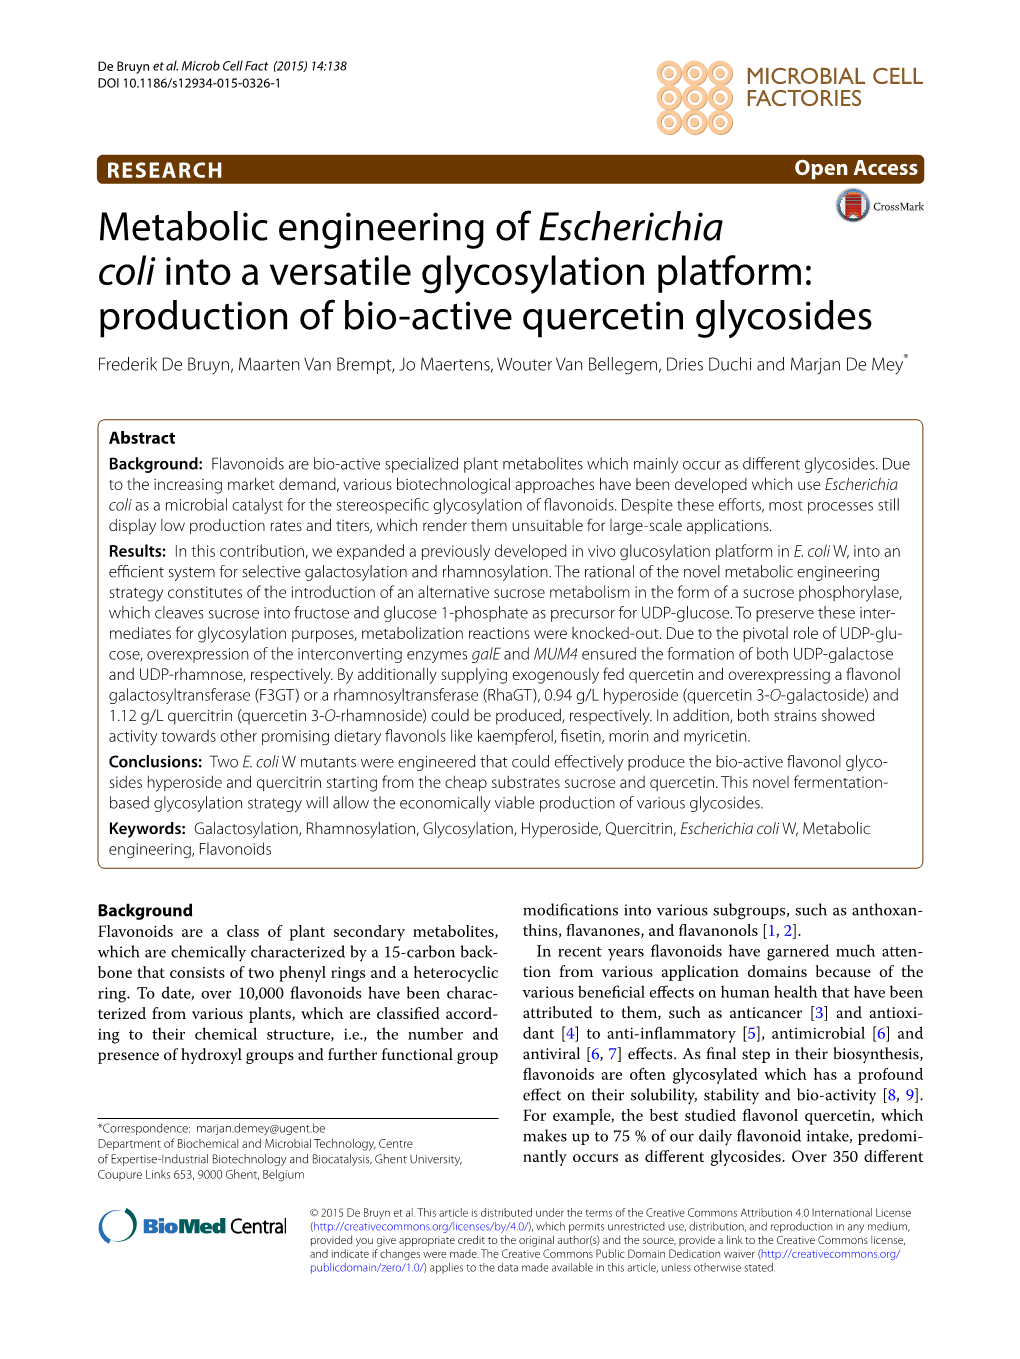 Metabolic Engineering of Escherichia Coli Into a Versatile Glycosylation